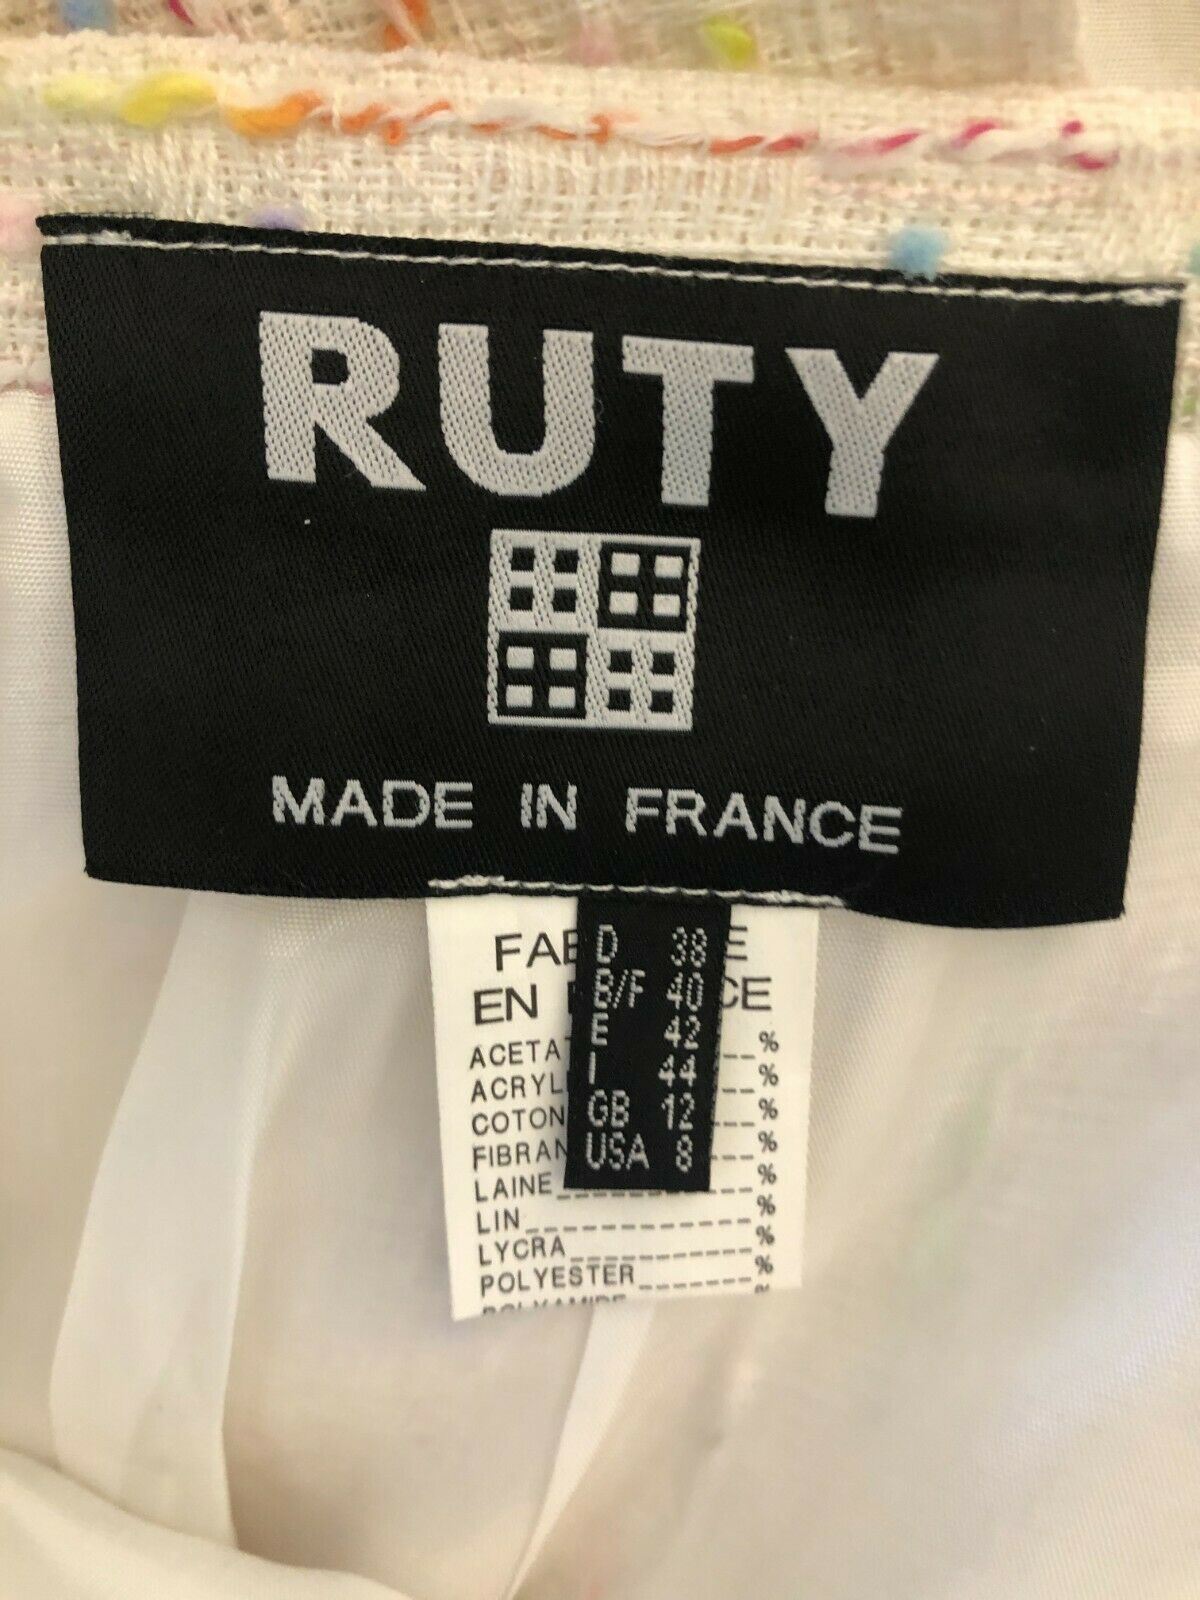 RUTY Paris White & Multicoloured Fleck Tweed Midi Pencil Skirt UK 10/12 US 6/8 EU 38/40 IT 42 BNWT RRP £149 Timeless Fashions